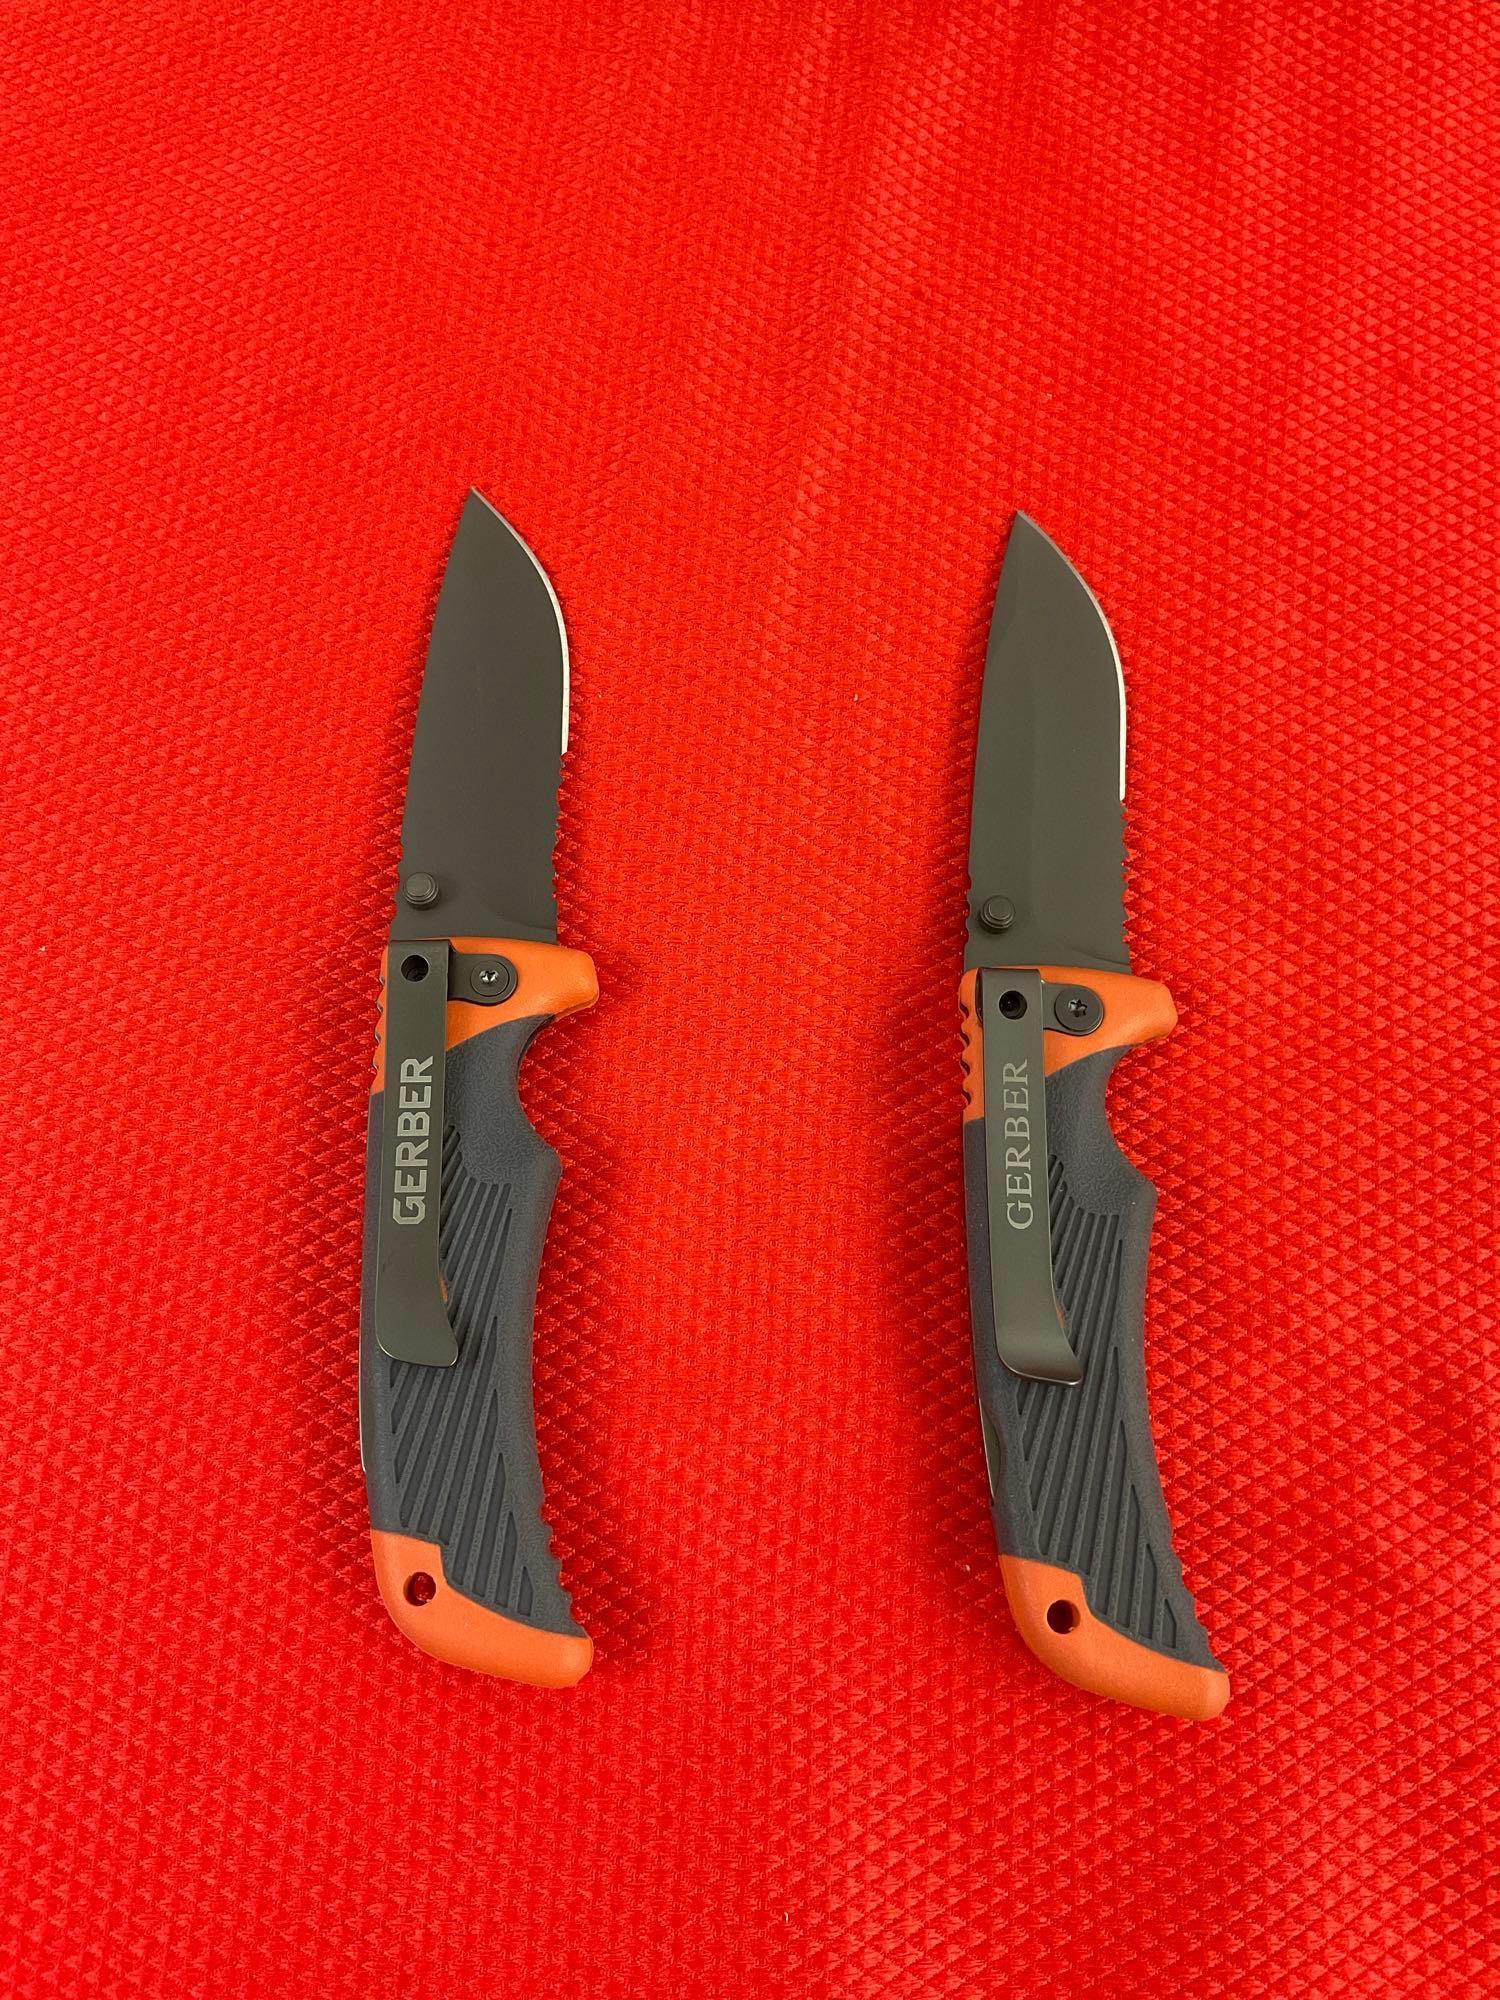 2 pcs Gerber Bear Grylls 3" Scout Folding Pocket Knives Model No. 30-000386. NIB. See pics.